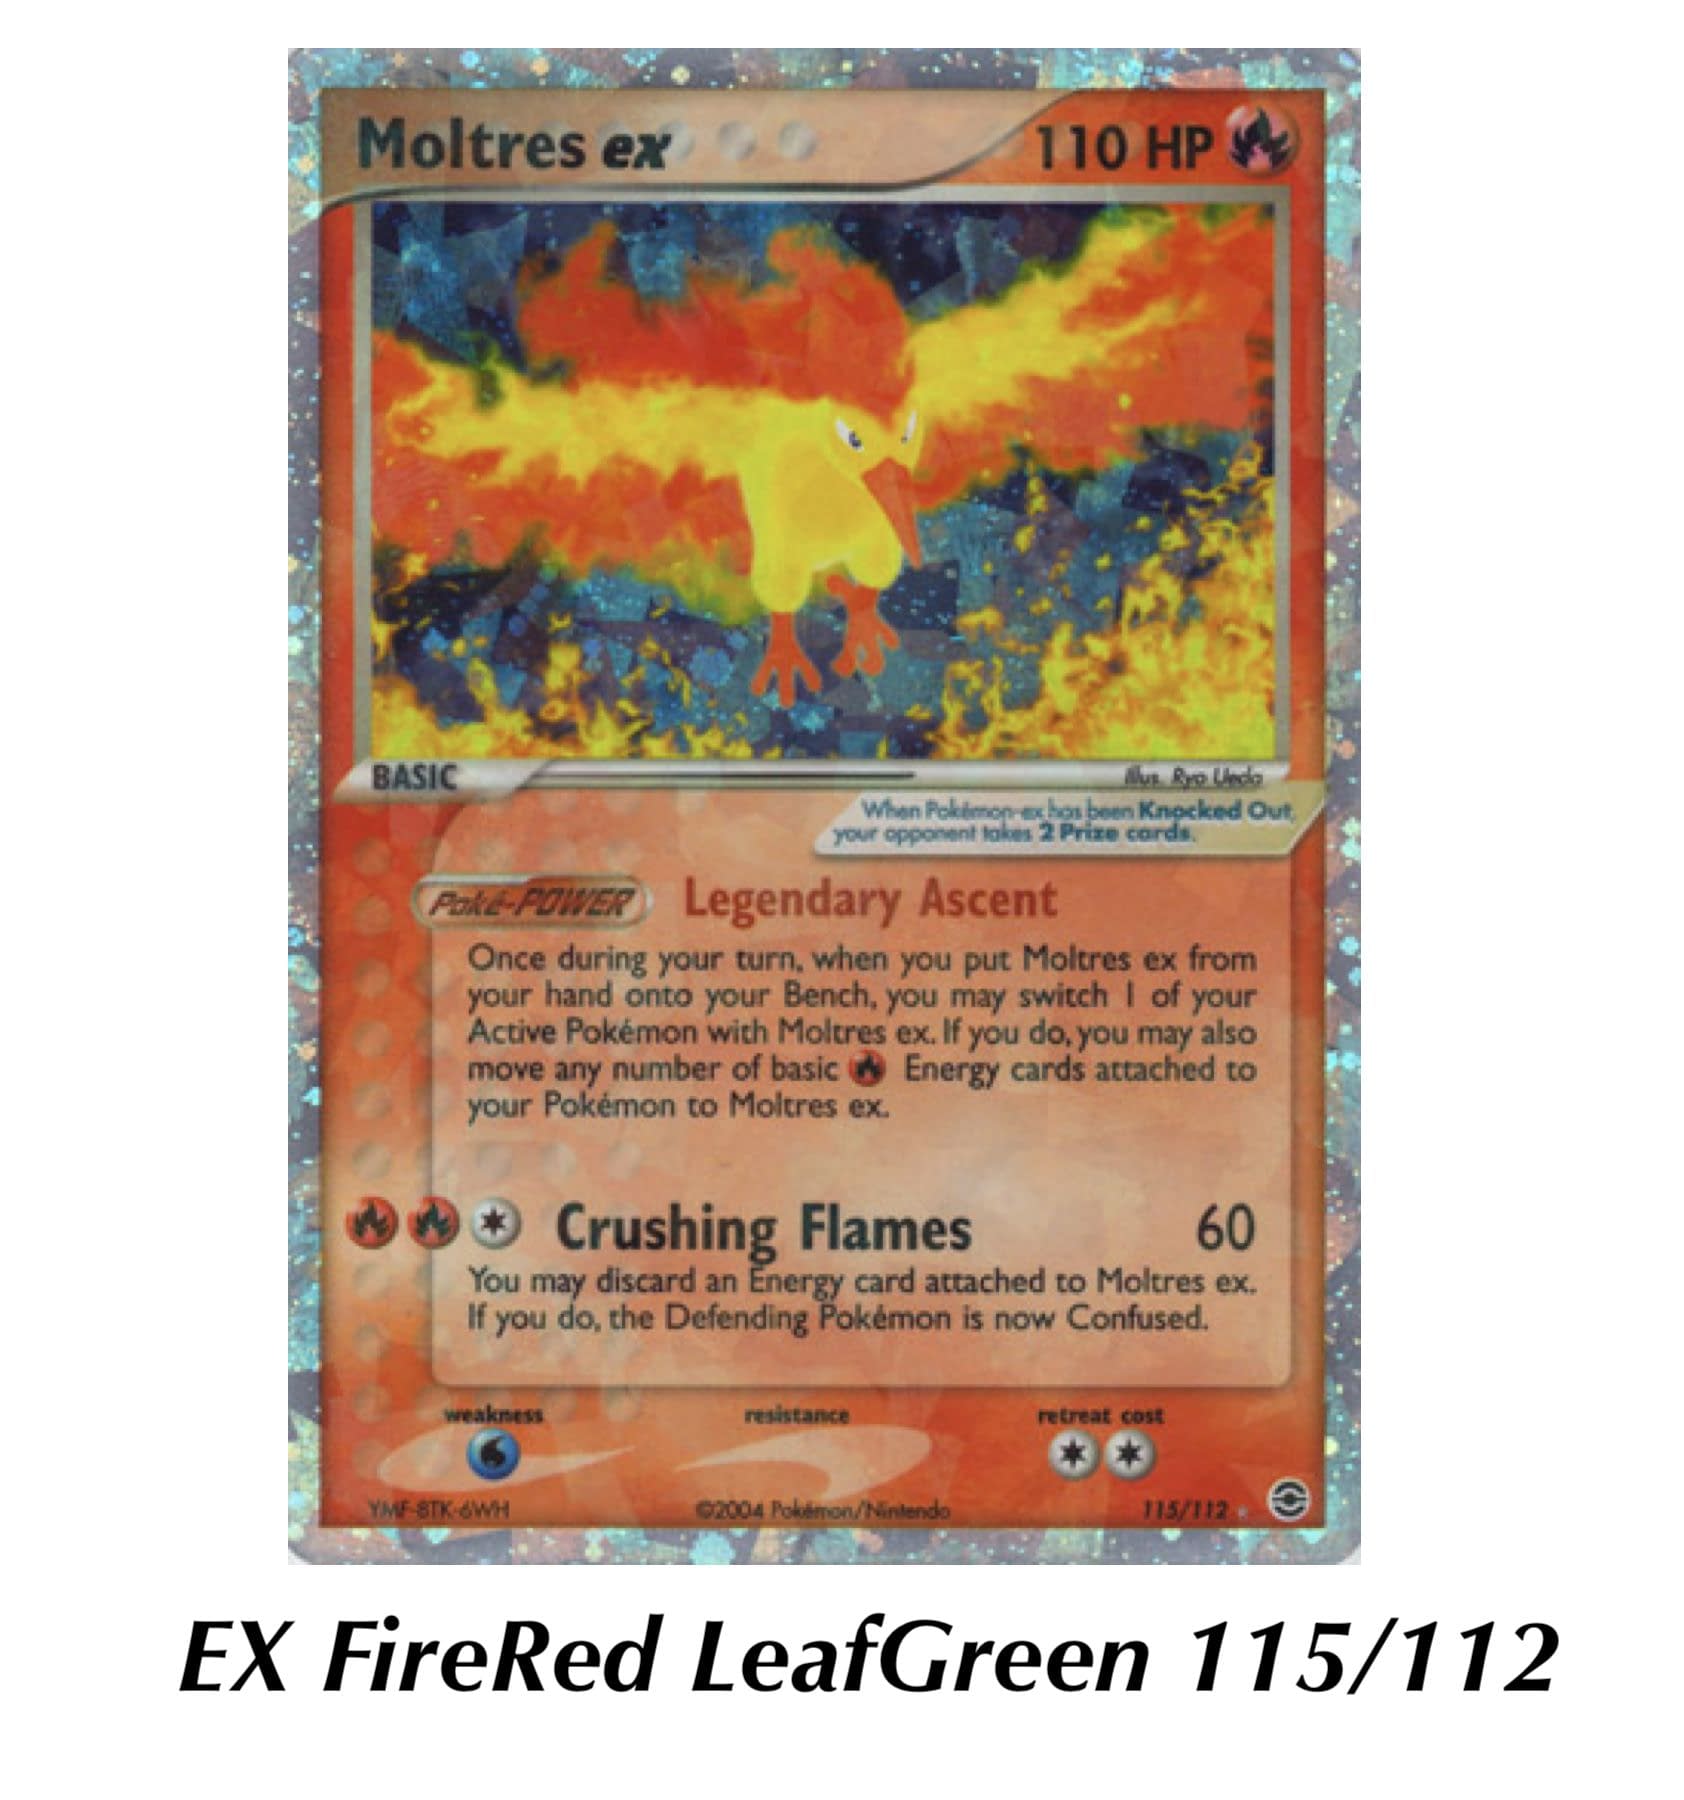 PrimetimePokemon's Blog: Moltres ex – EX FireRed and LeafGreen Pokemon Card  Review